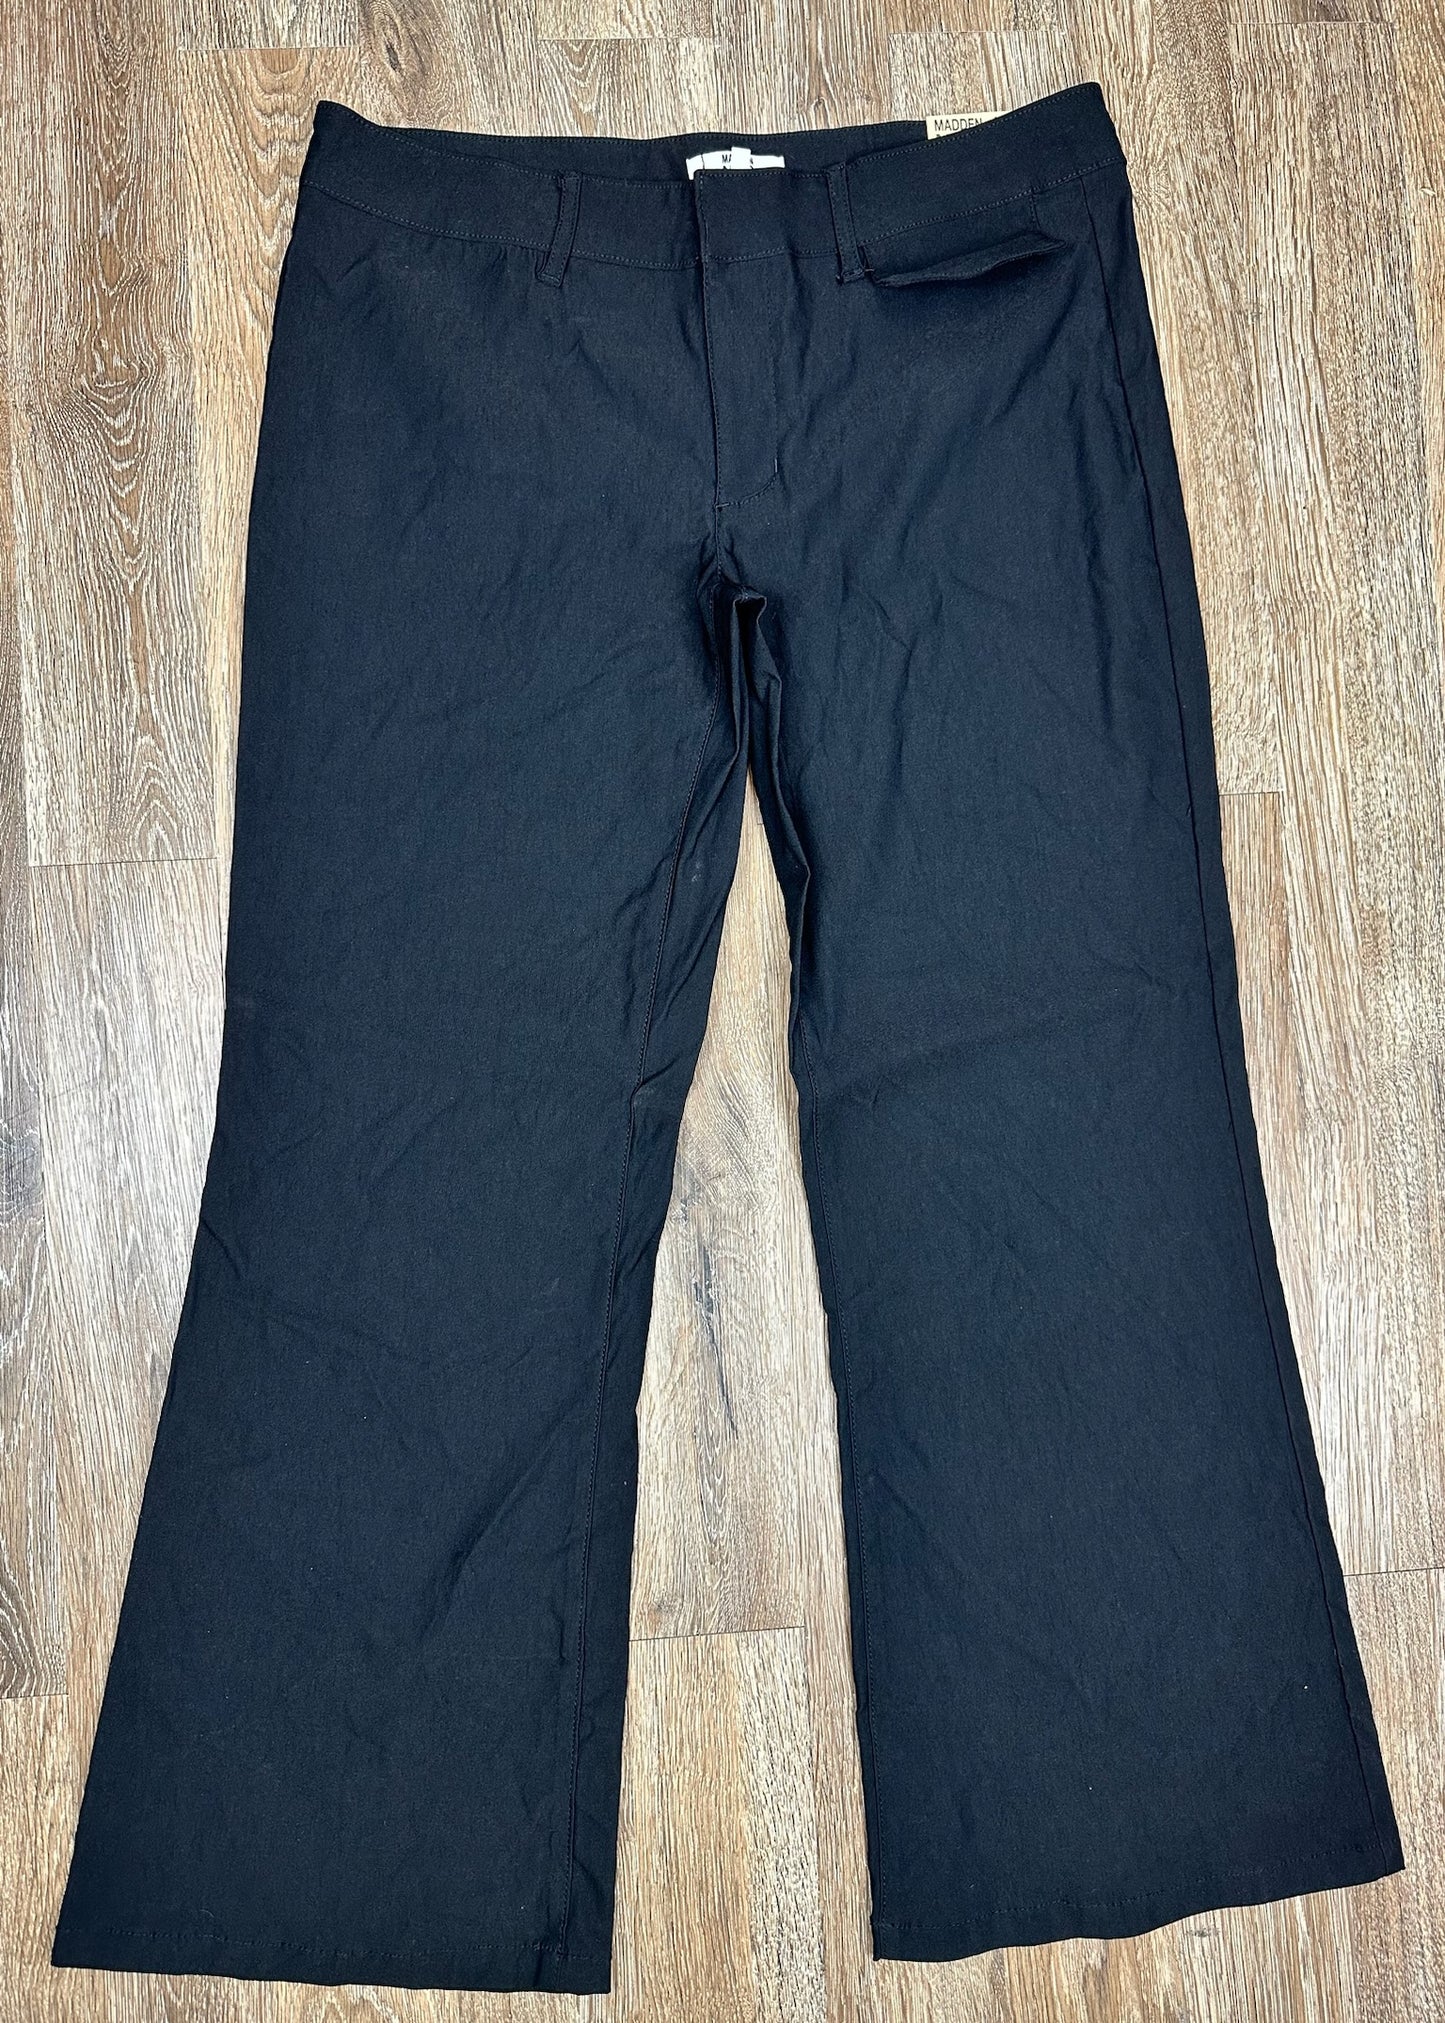 Black Dress Pants by Madden NYC